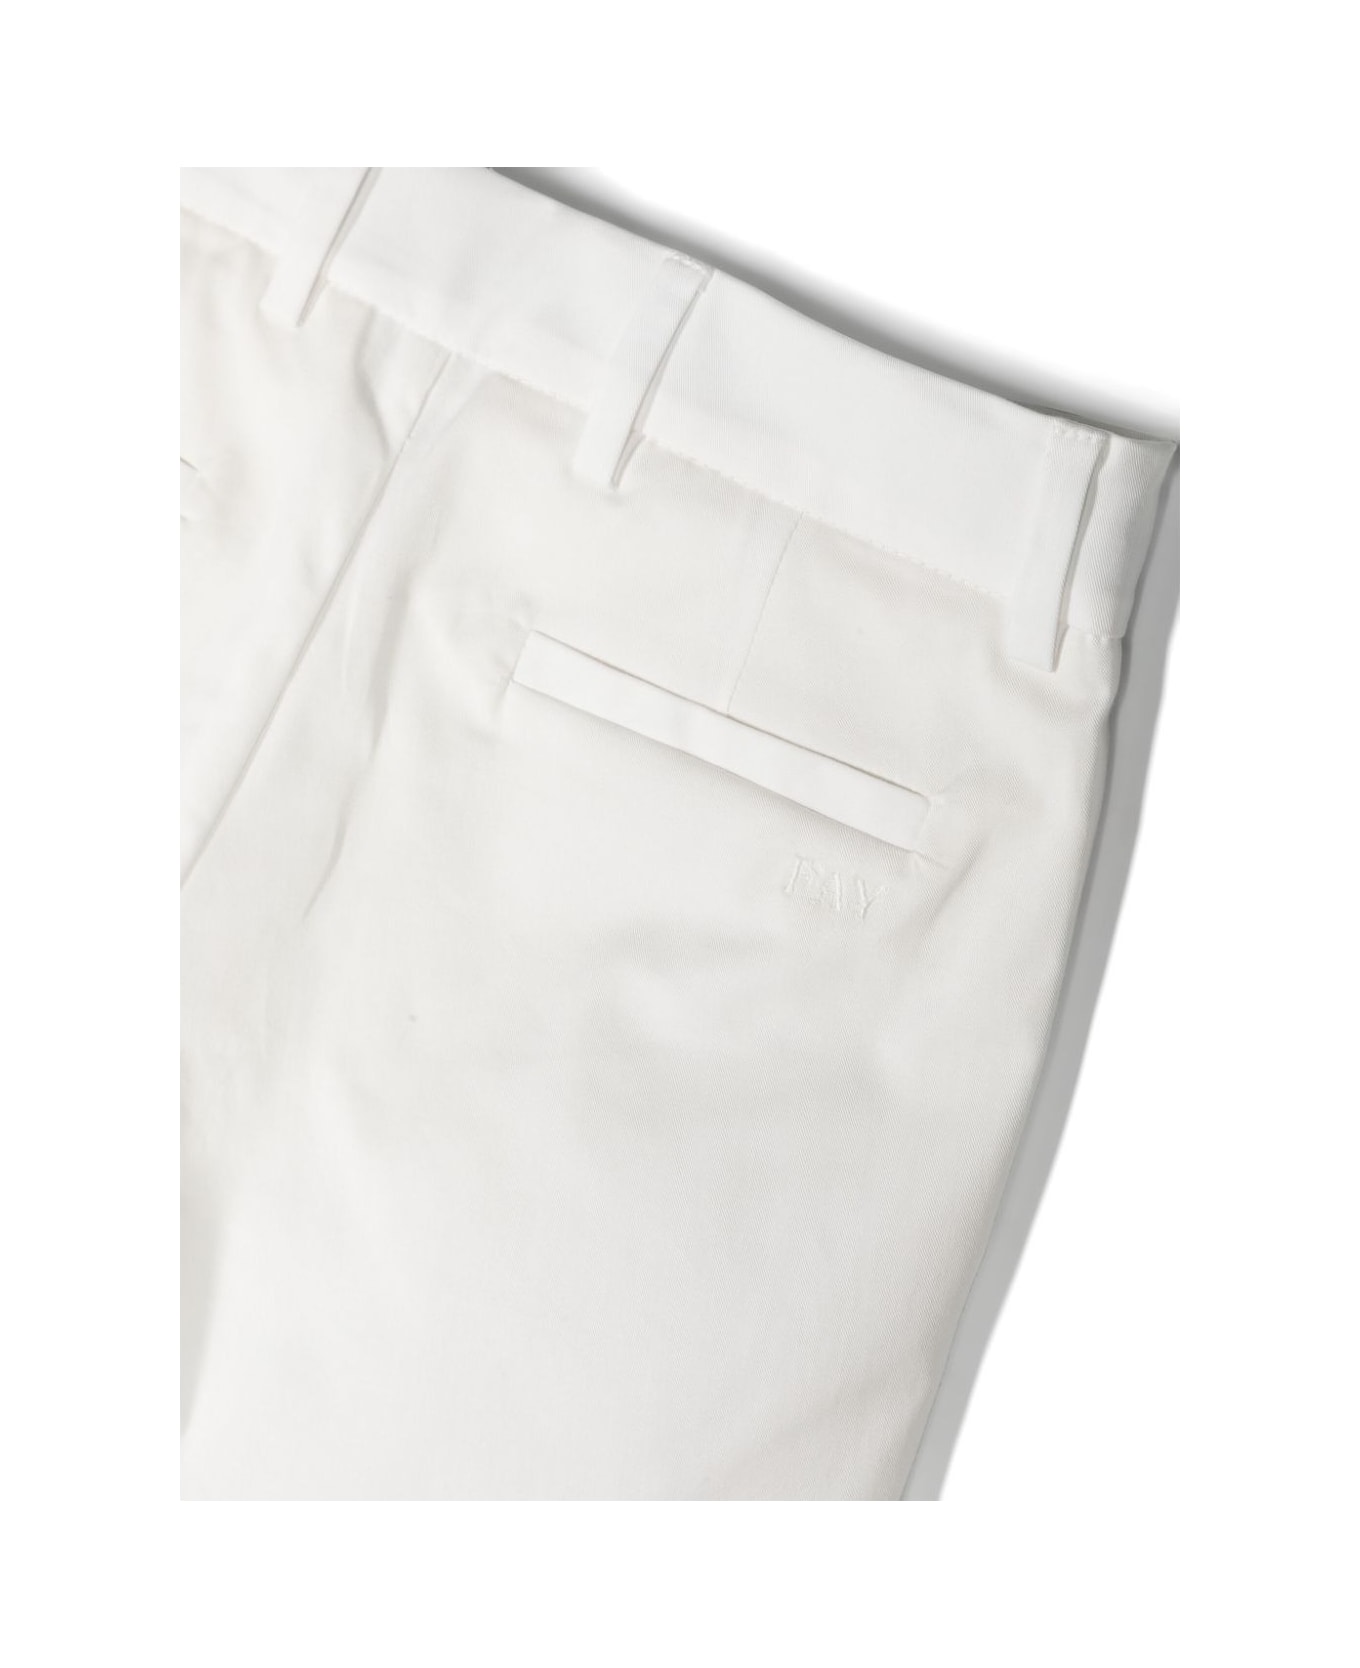 Fay White Cotton Blend Tailored Bermuda Shorts - White